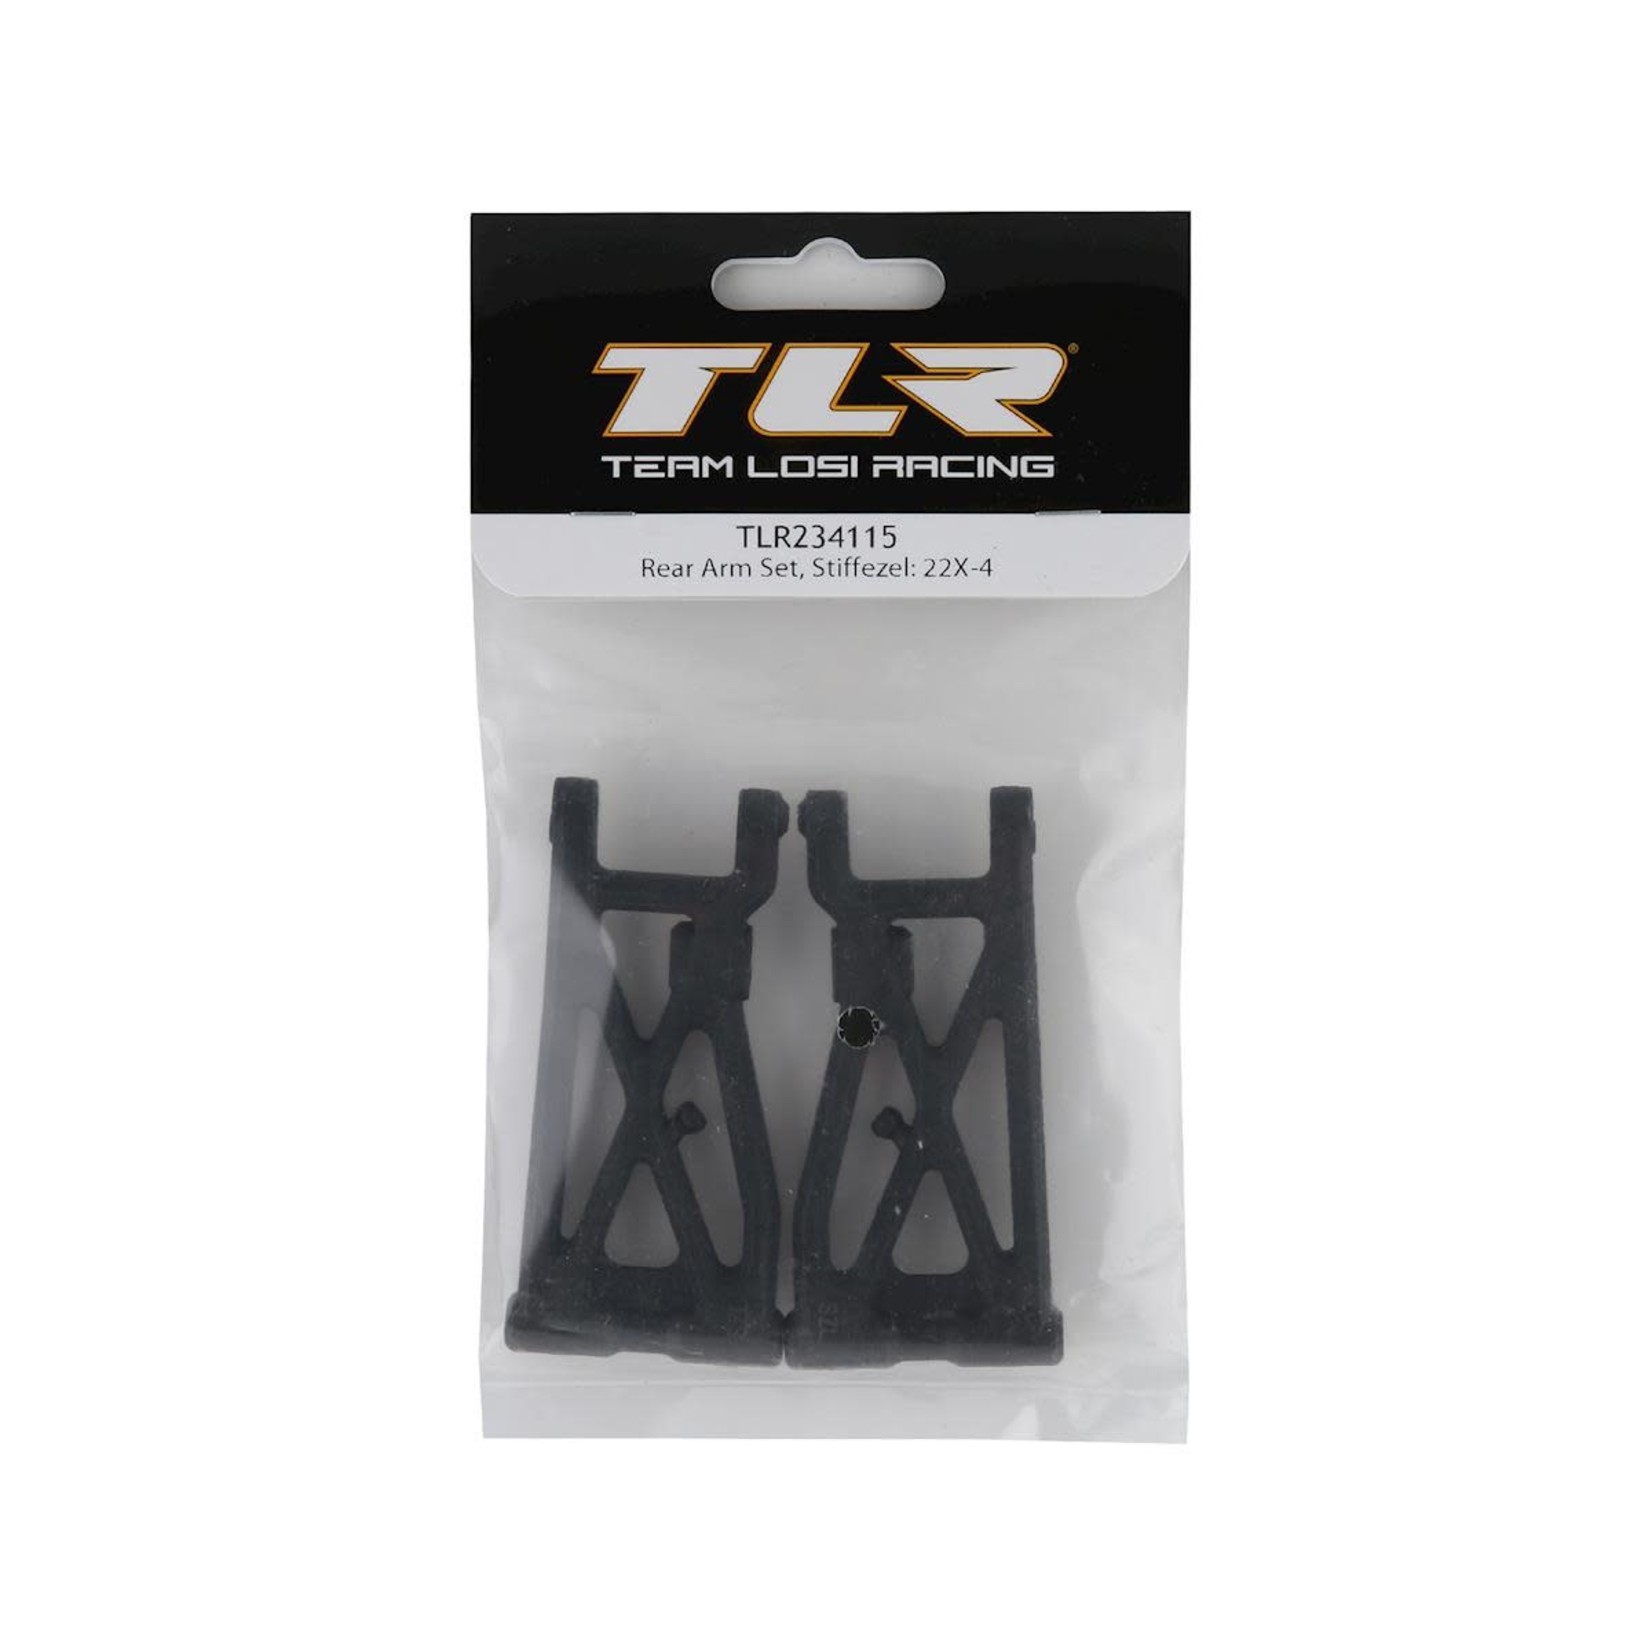 TLR Team Losi Racing 22X-4 Rear Arm Set (Stiffezel) #TLR234115